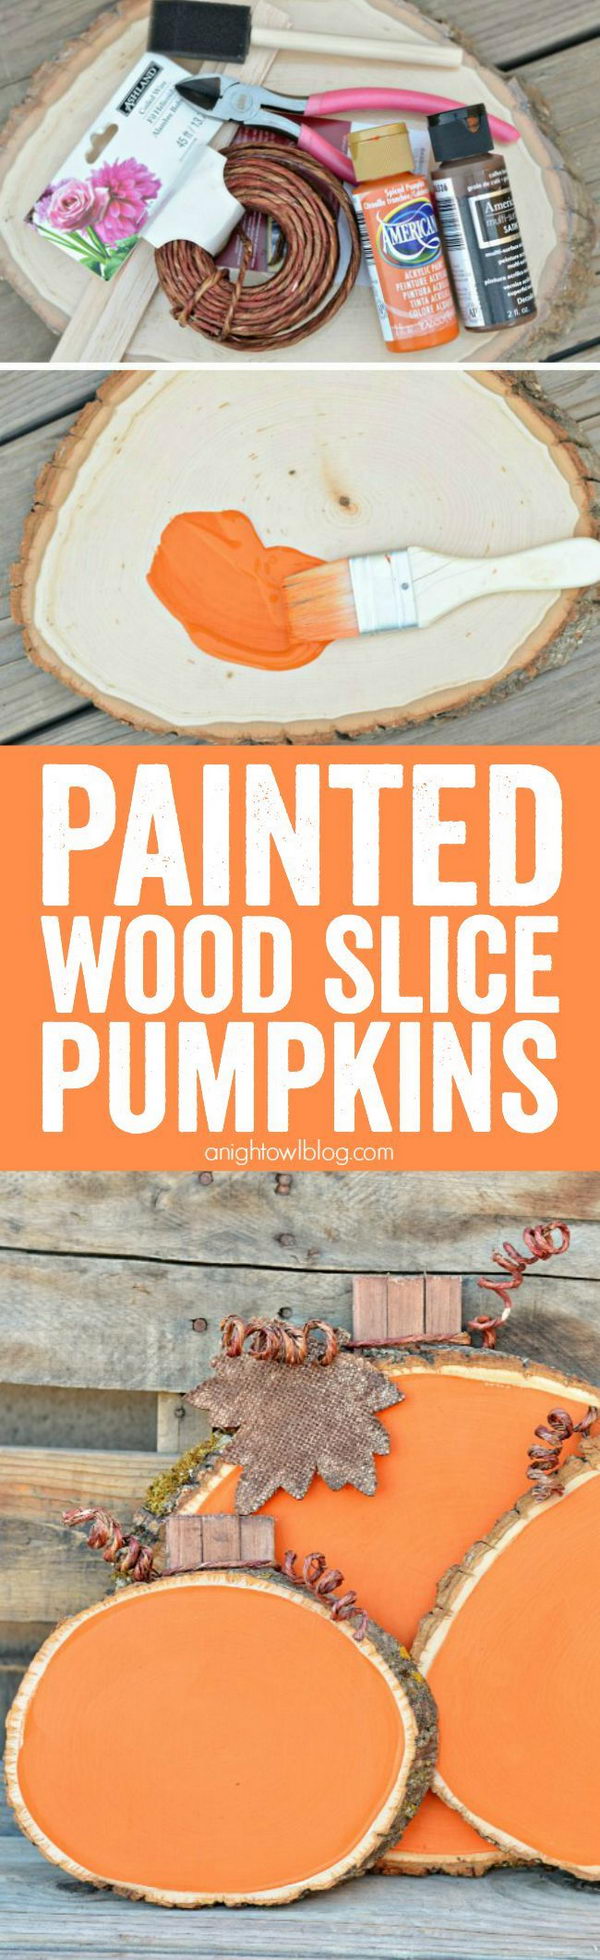 DIY Painted Wood Slice Pumpkins. Make adorable craft wood slice pumpkins from wood and paint!  Tutorial via 